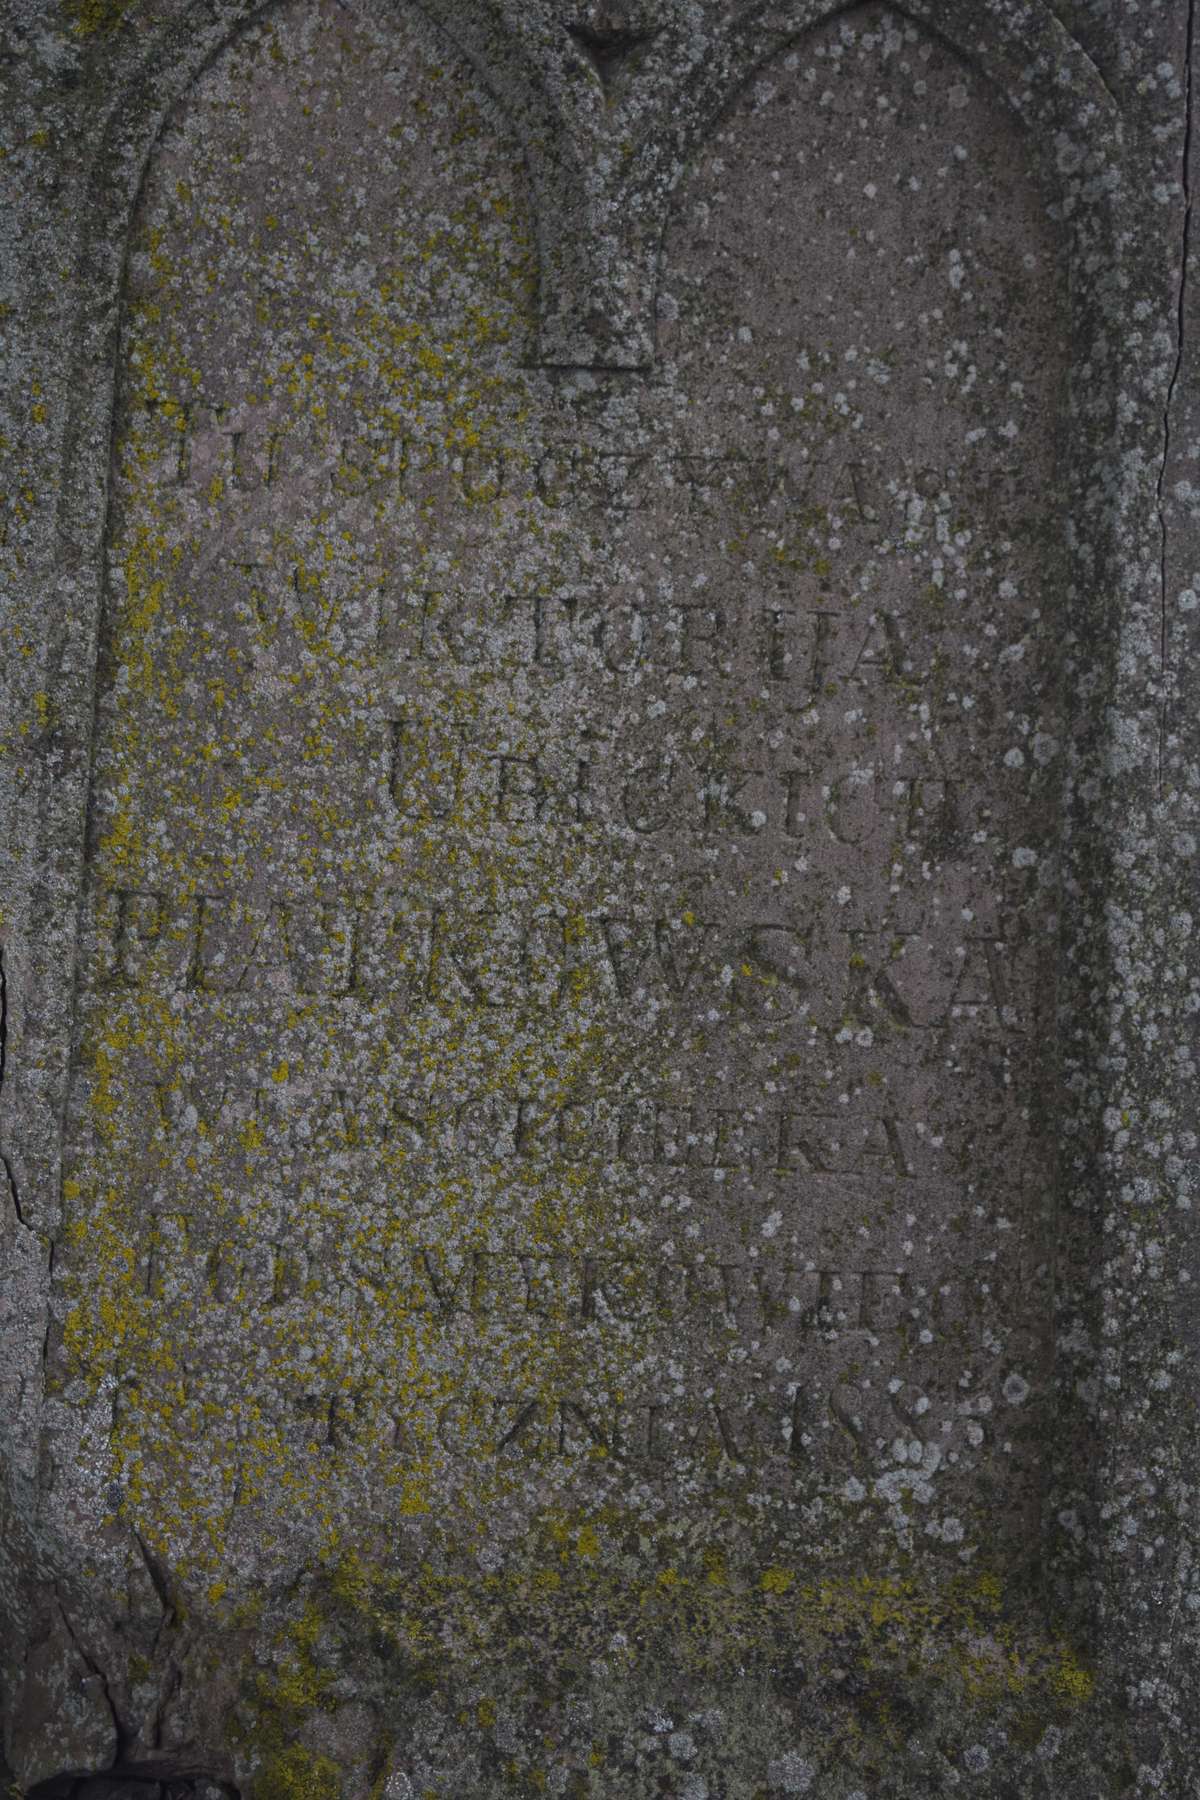 Inscription from the gravestone of Wiktoria Piatkowska, cemetery in Smykowce